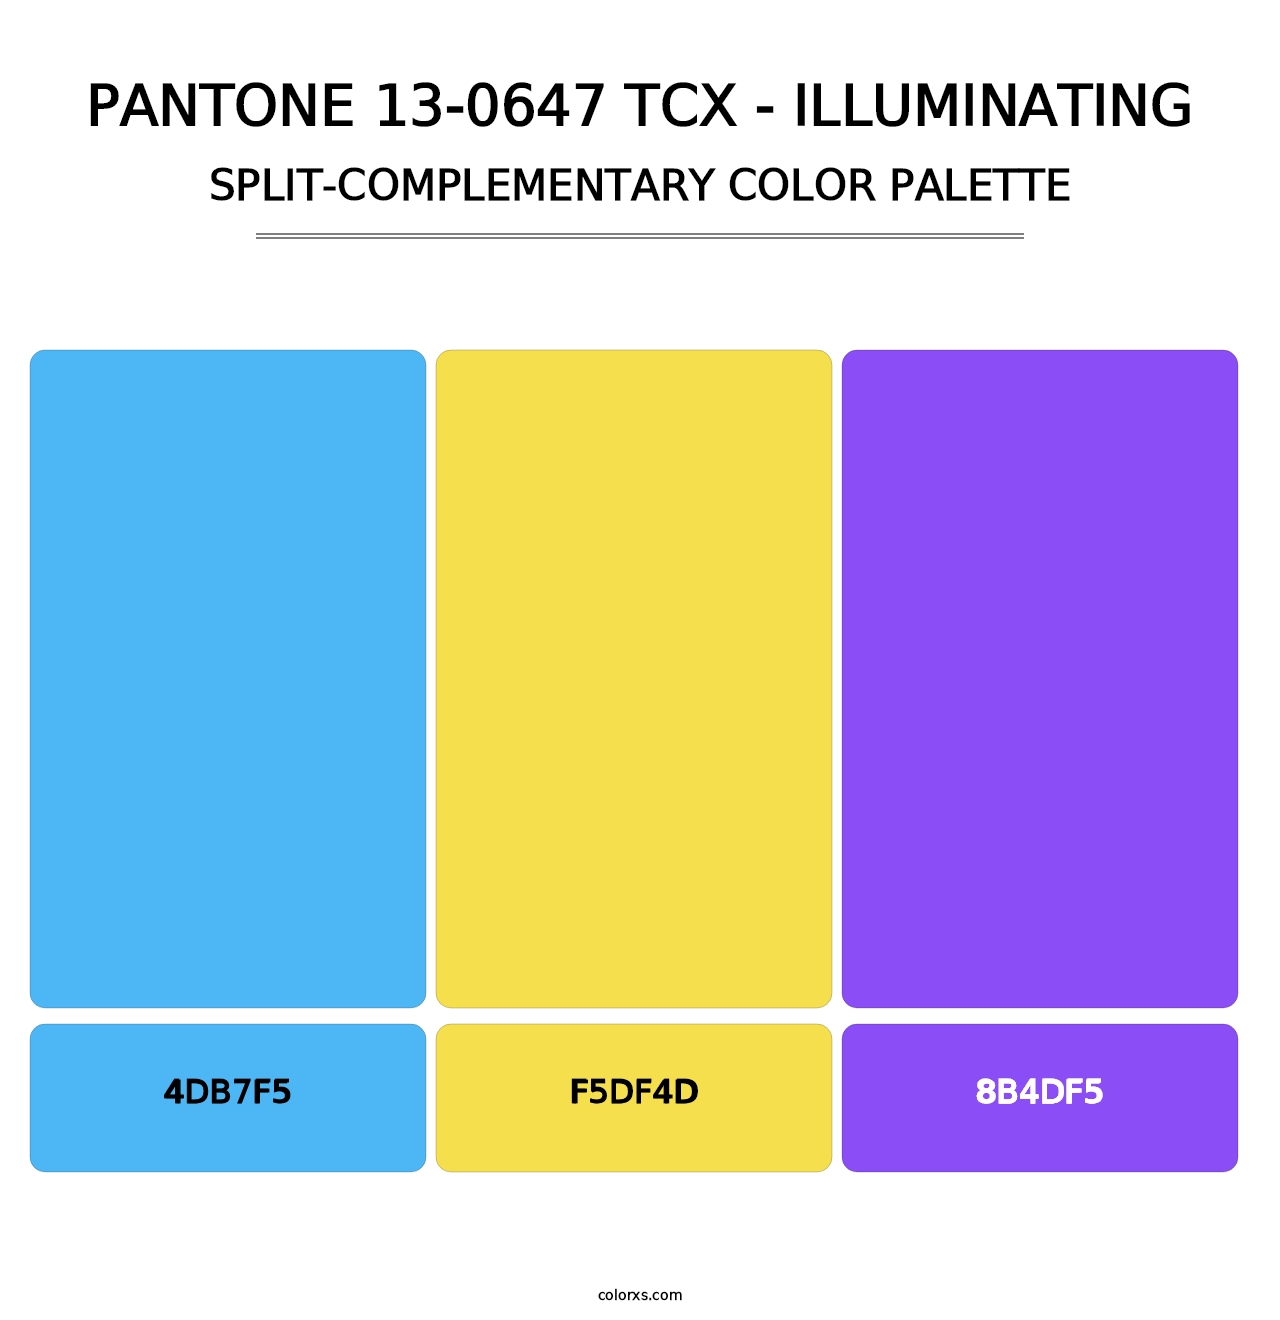 PANTONE 13-0647 TCX - Illuminating - Split-Complementary Color Palette